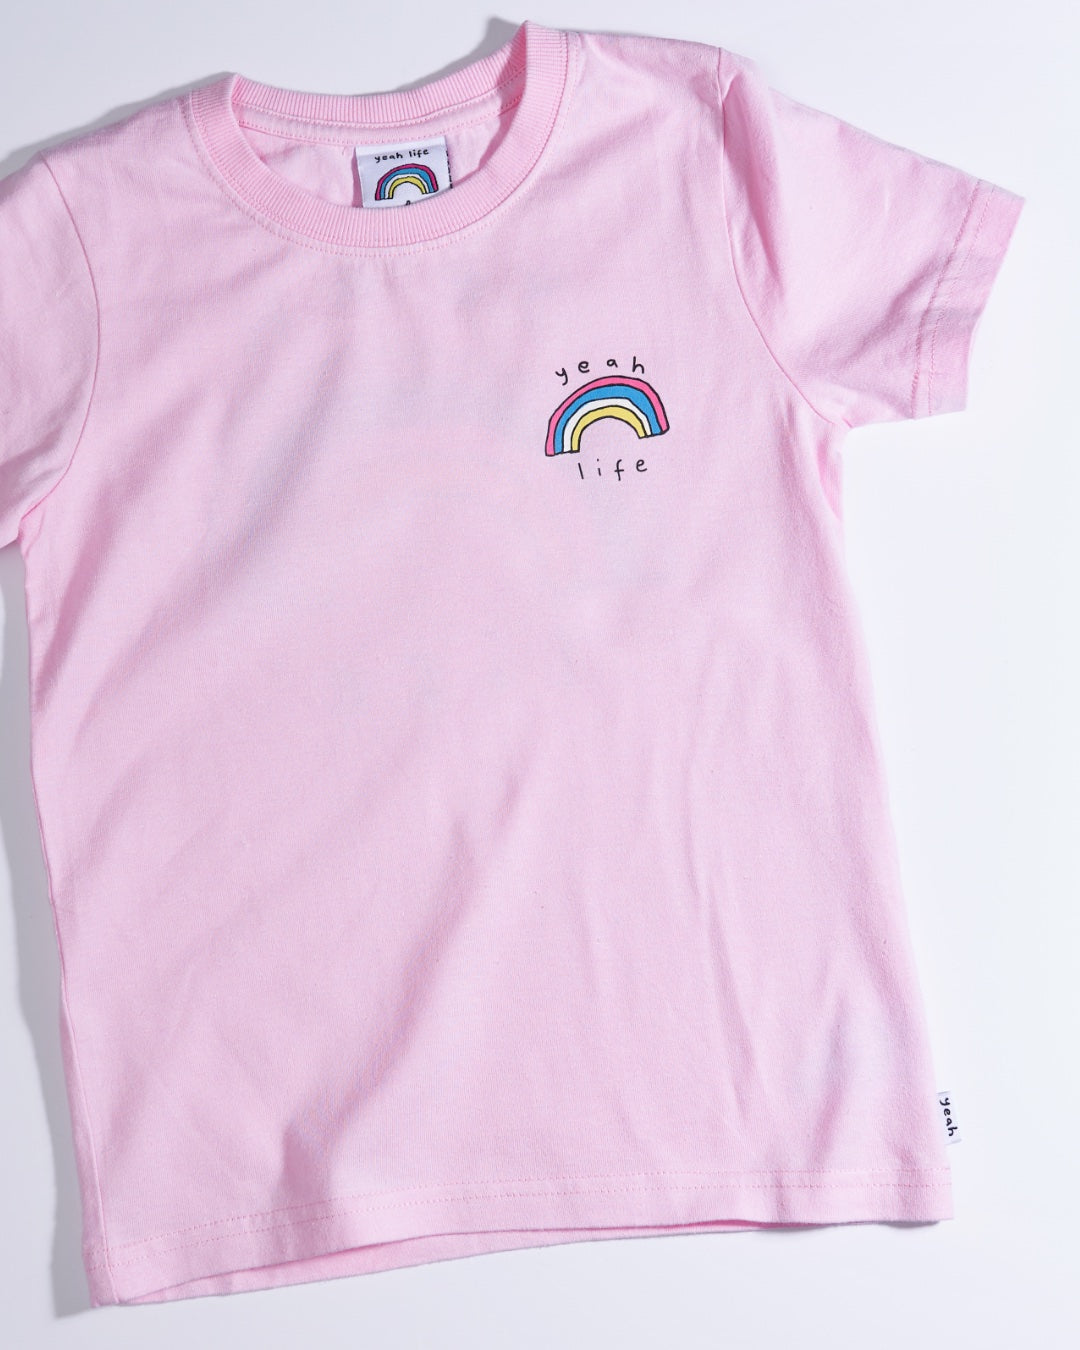 YEAH LIFE Dusty Pink Kids Hemp Organic Cotton T-Shirt